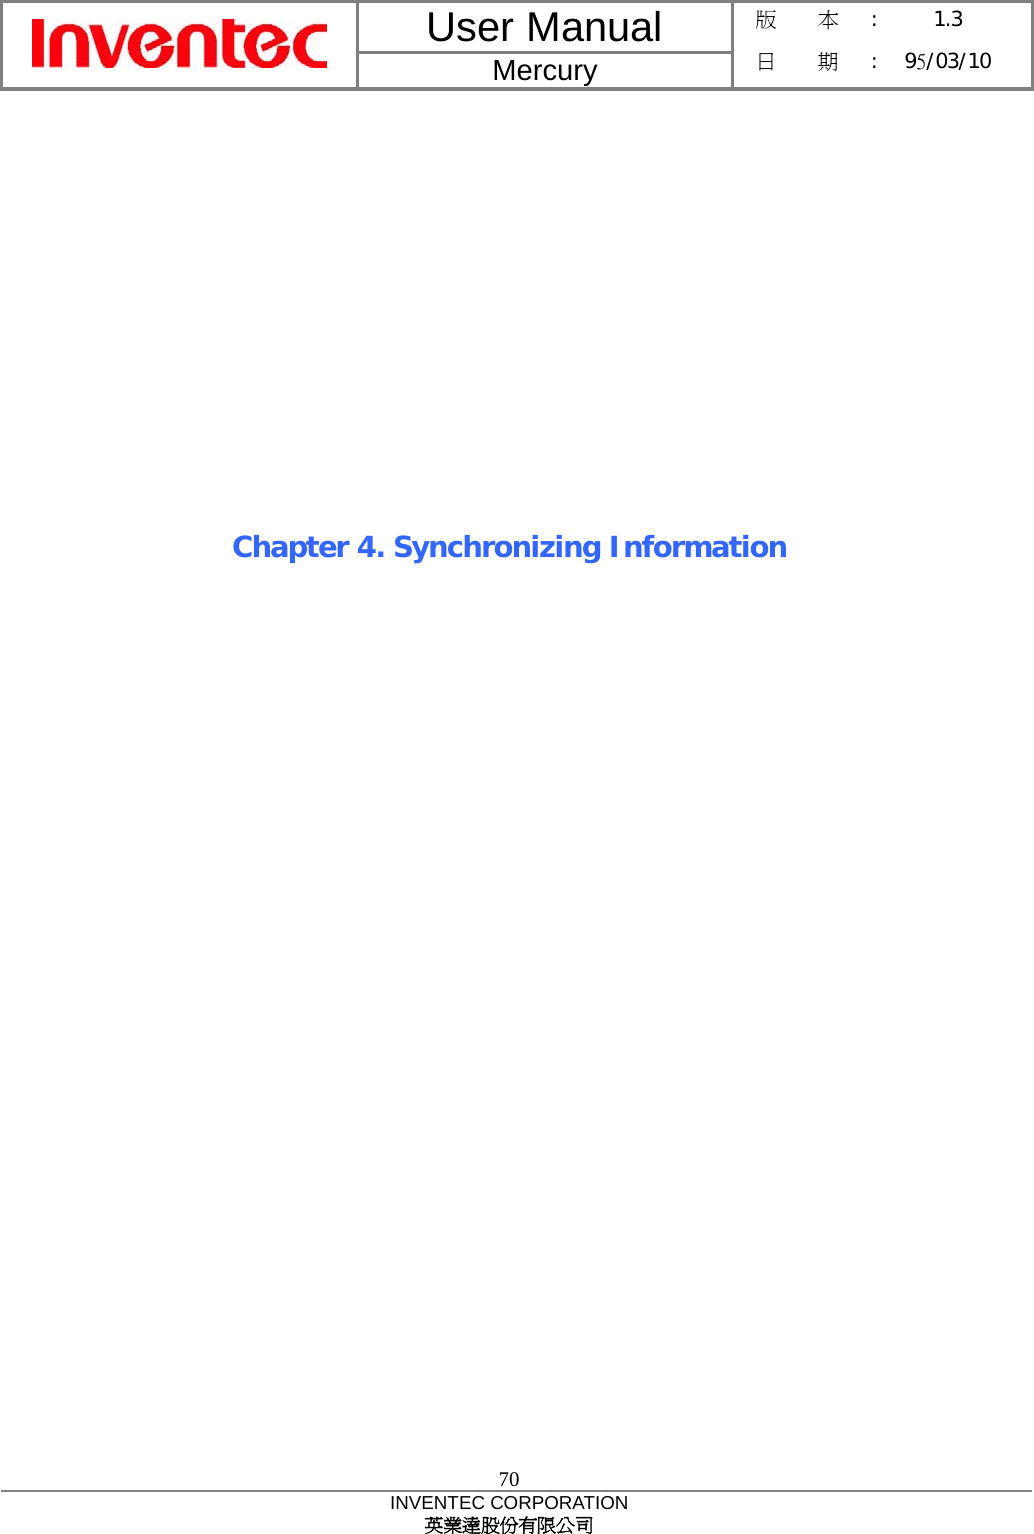 User Manual  Mercury 版    本 :  1.3 日    期 : 95/03/10  70 INVENTEC CORPORATION 英業達股份有限公司             Chapter 4. Synchronizing Information 